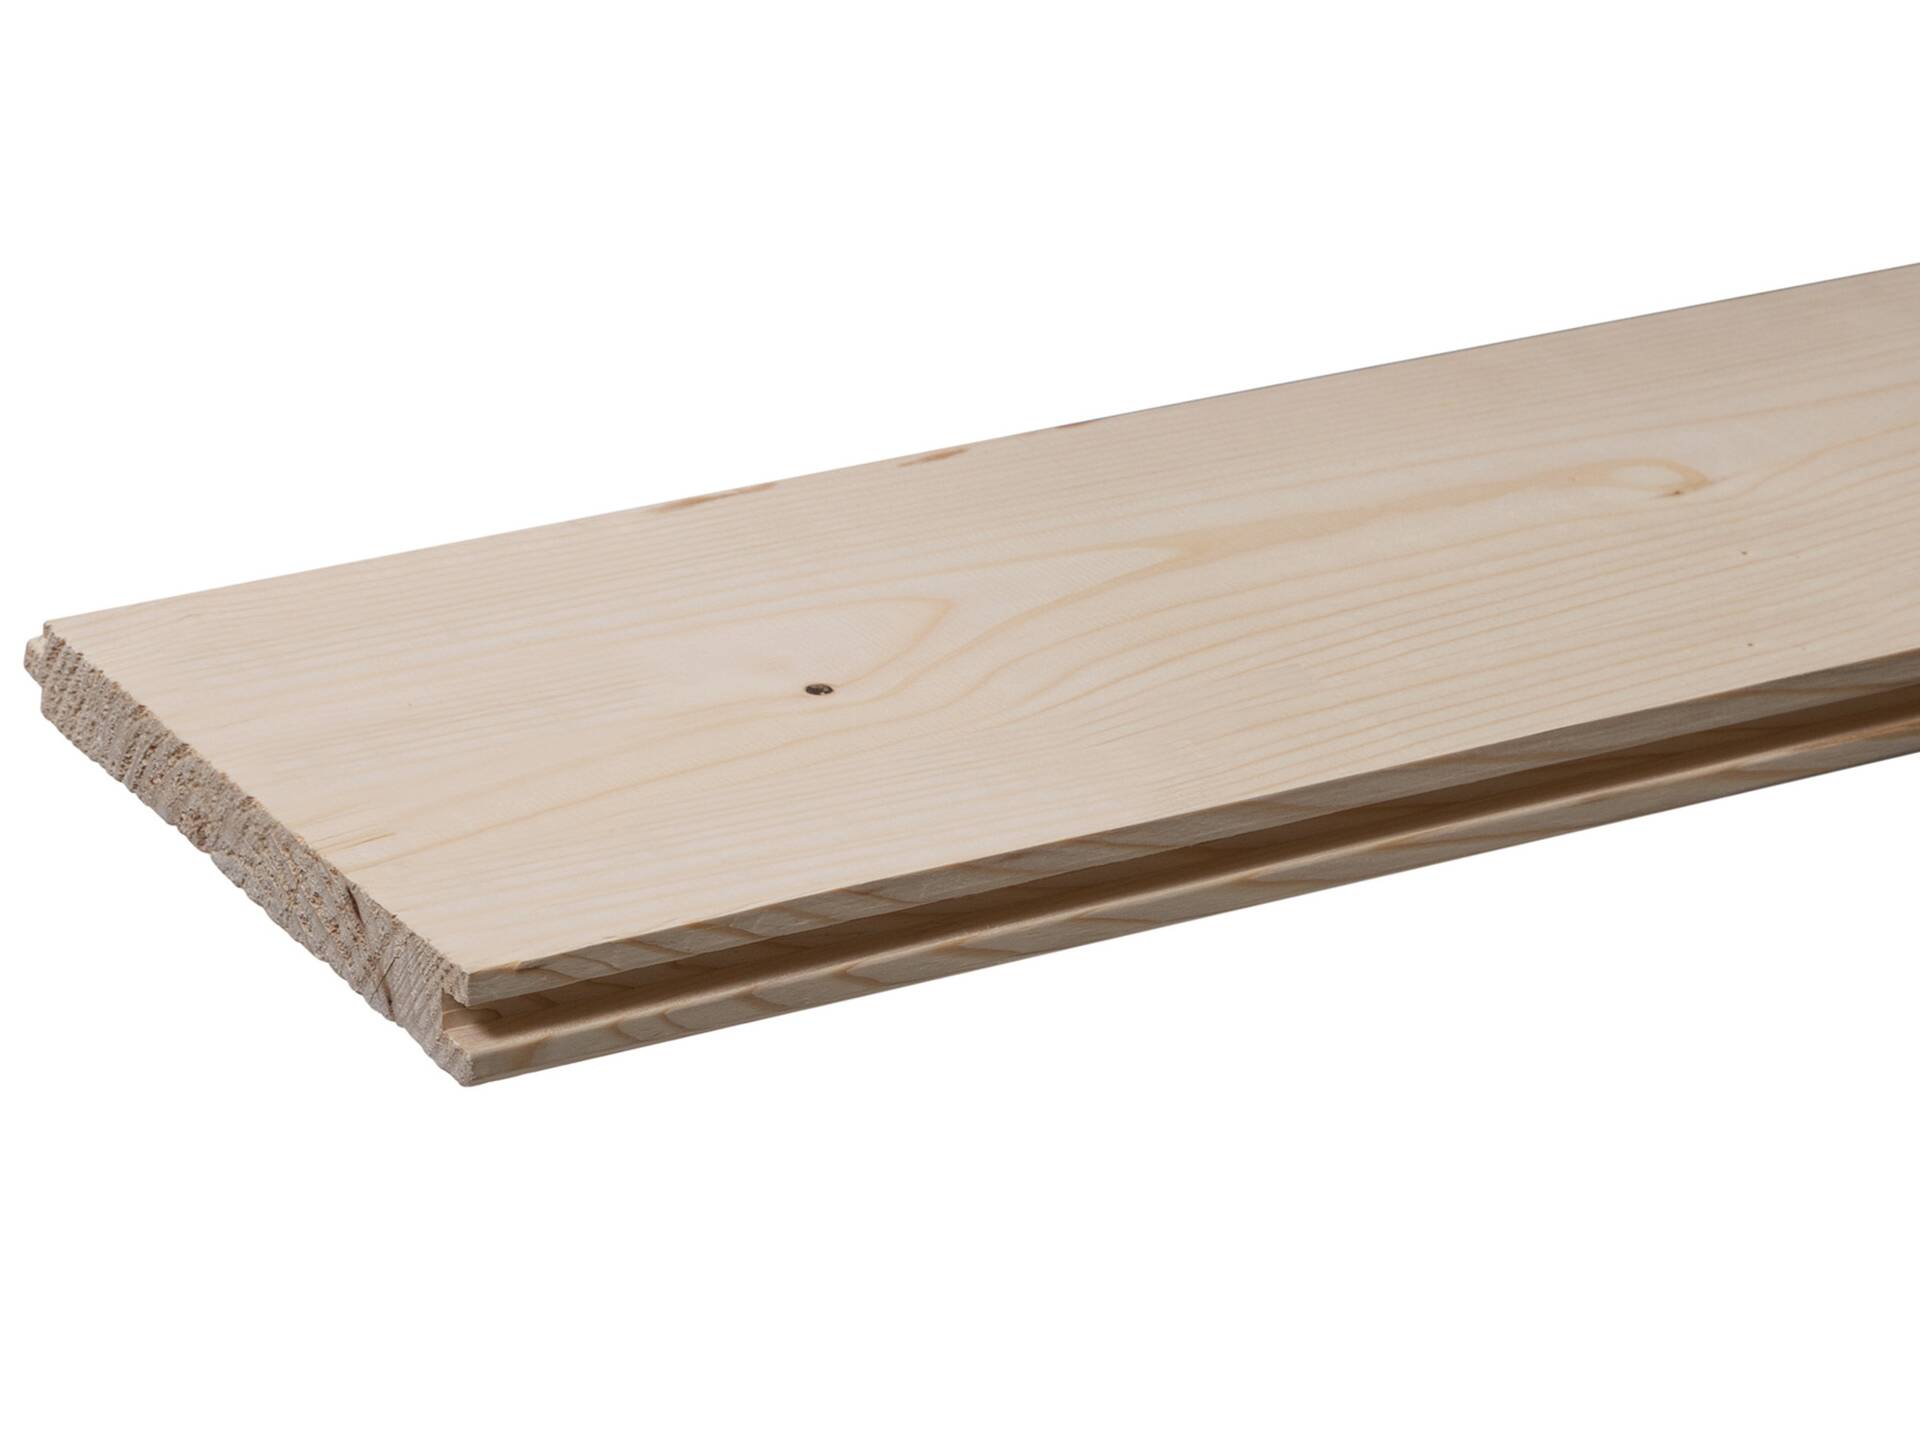 Nut- und Federbretter, Fichte gehobelt, Material Massivholz, verschiedene Längen erhältlich 19 mm | 5 Meter | 1 m²